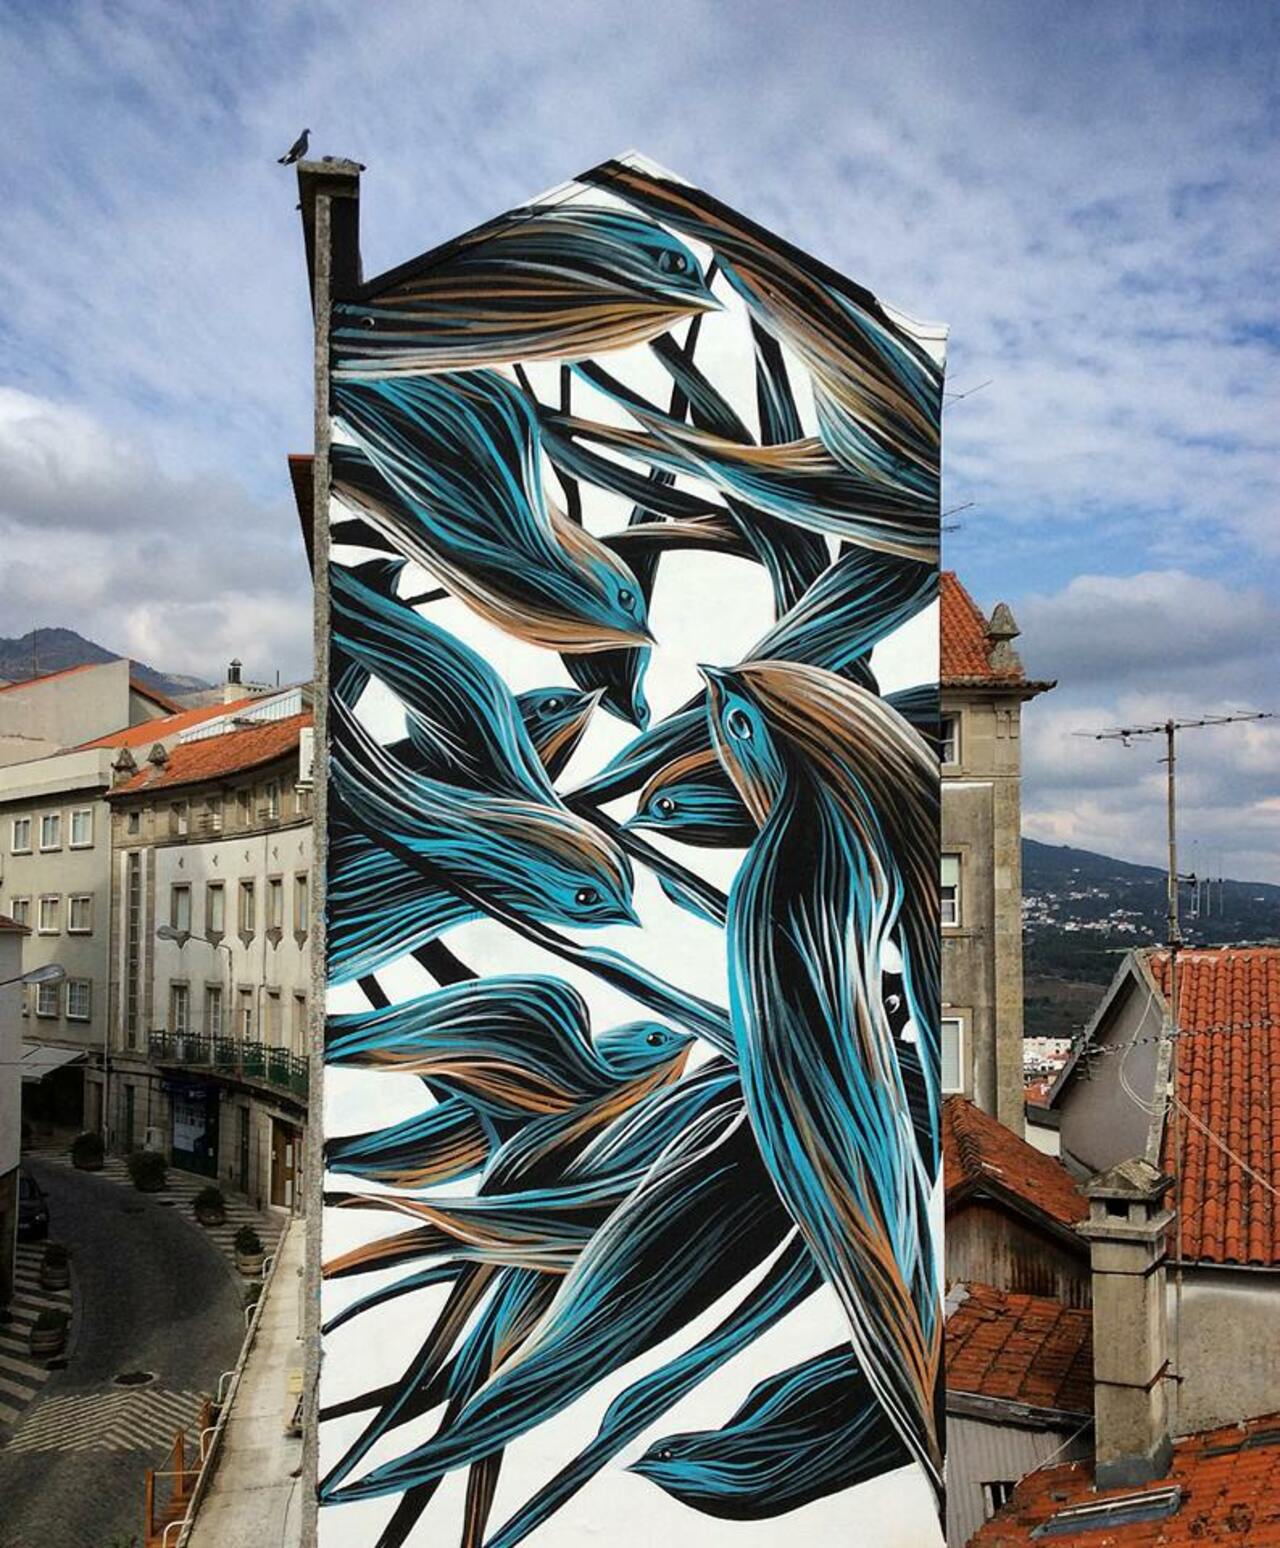 A beautiful new piece by artist #Pantonio in Covilhã, #Portugal #mural #streetart #graffiti #urbanart https://t.co/G8NlUuWcjk